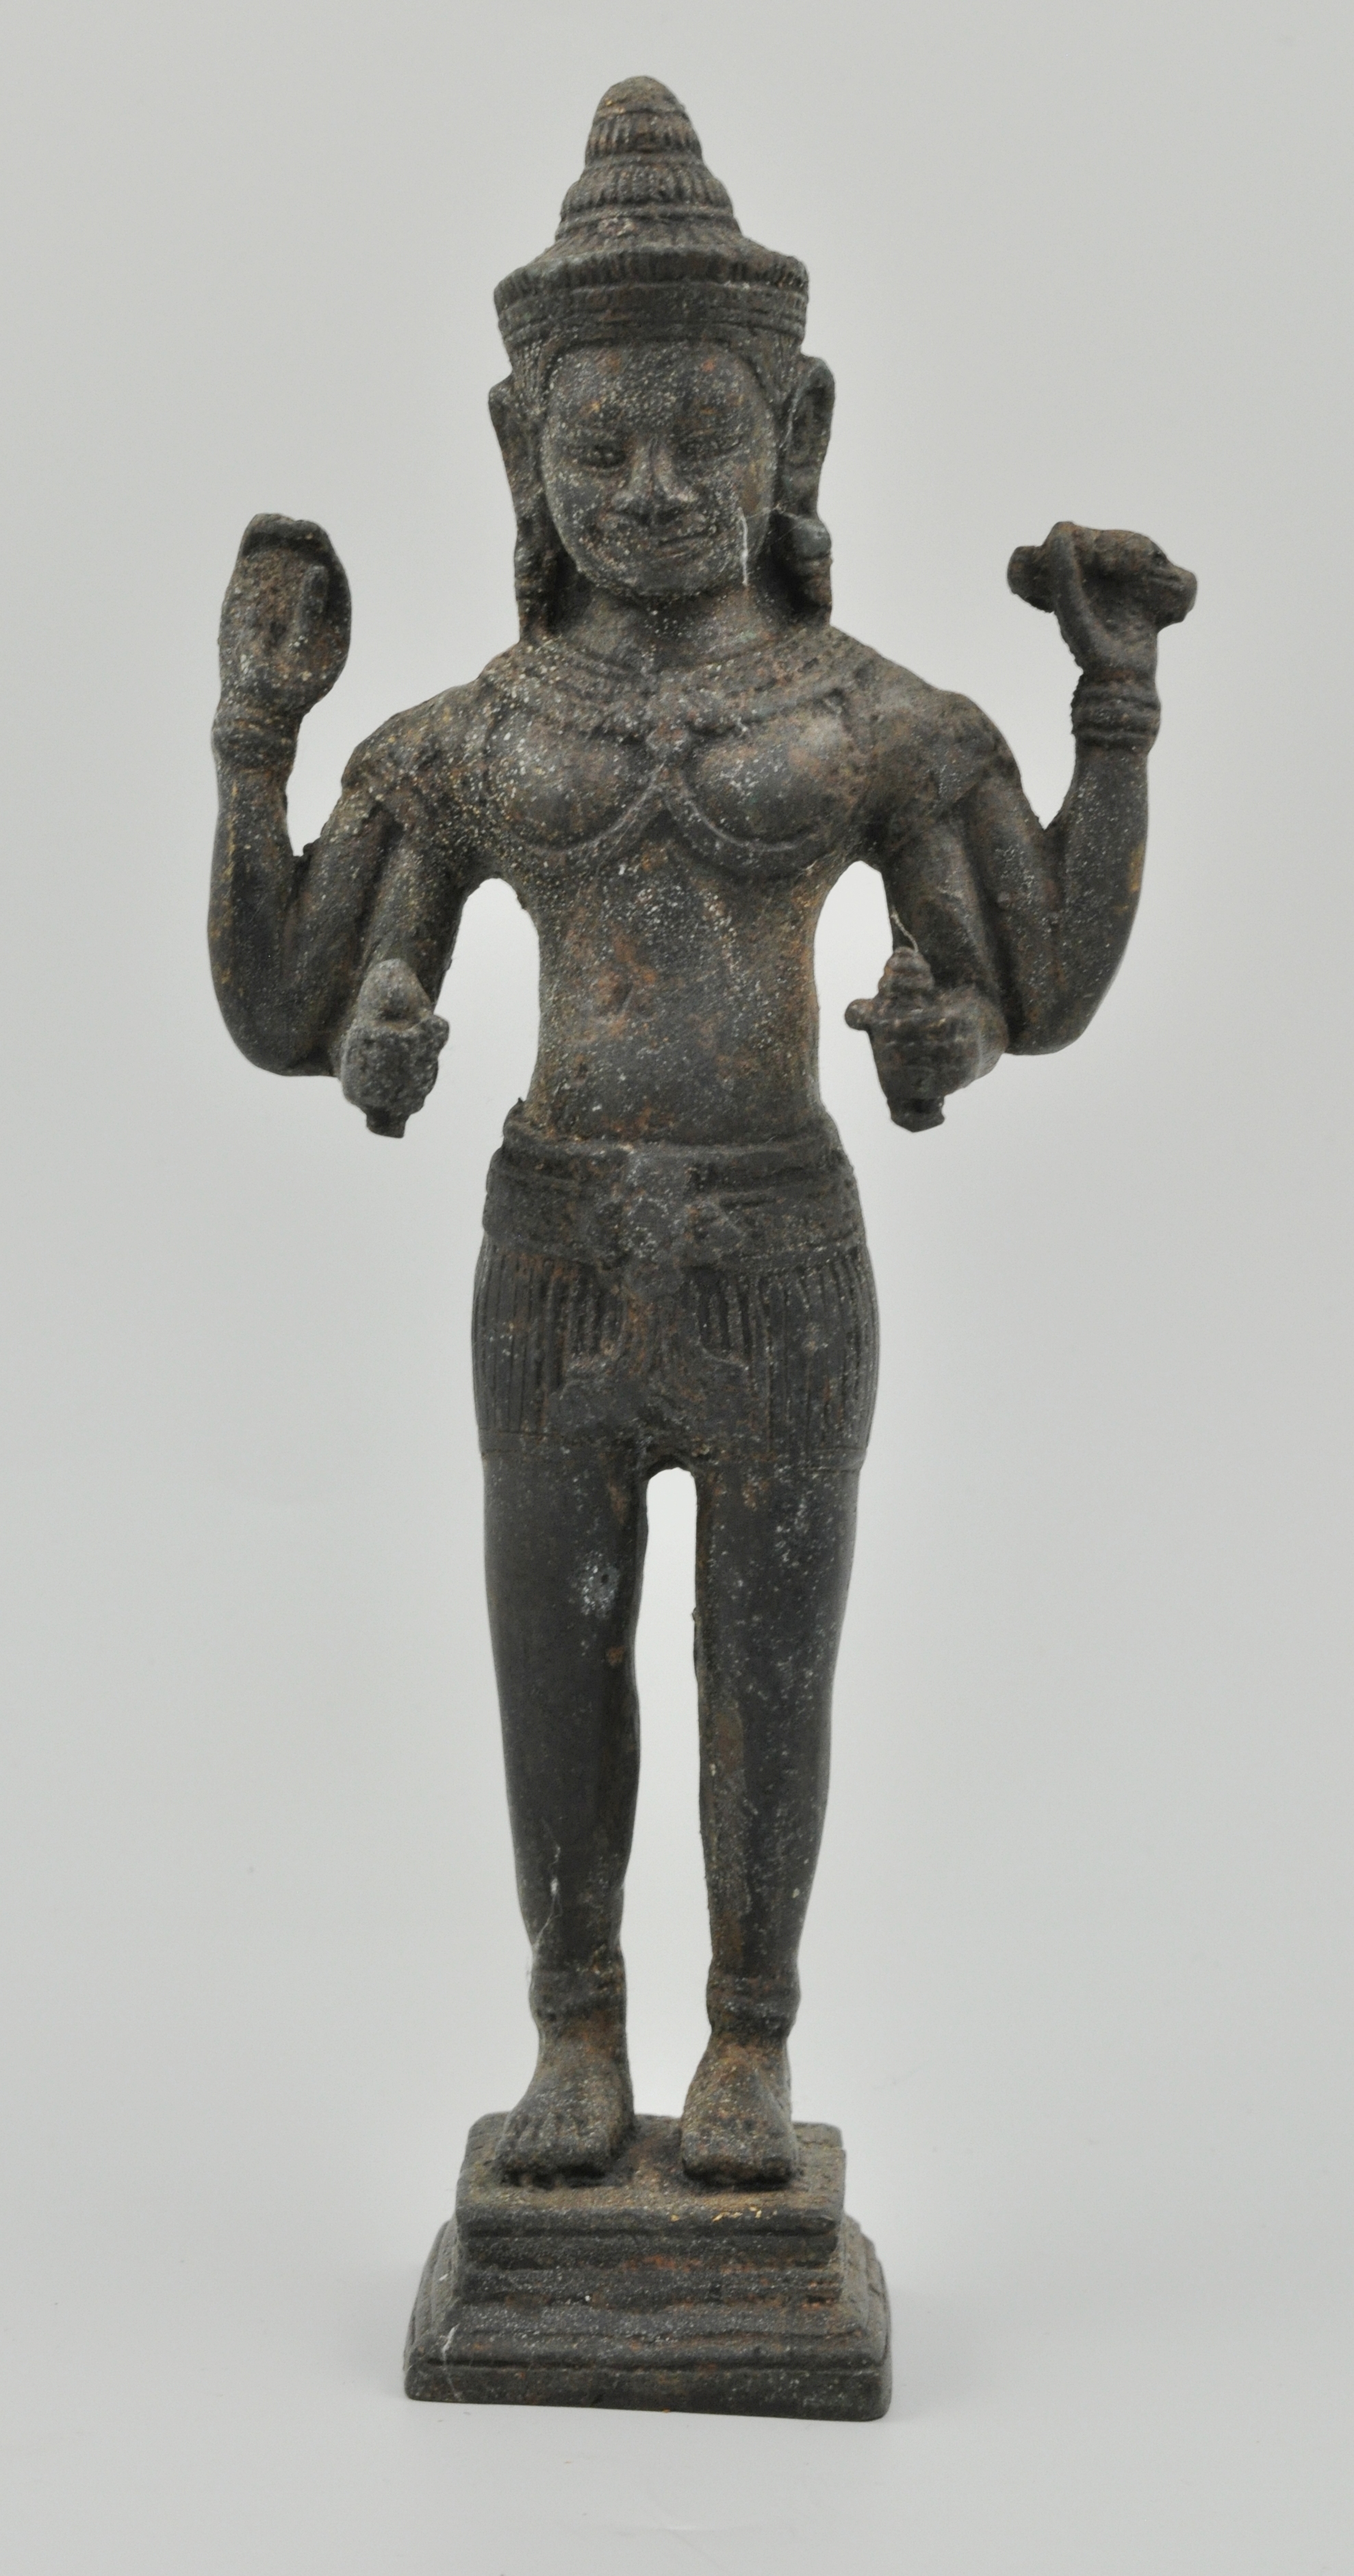 Thai bronze figure of a four armed deity, modelled standing in an ornate headdress,